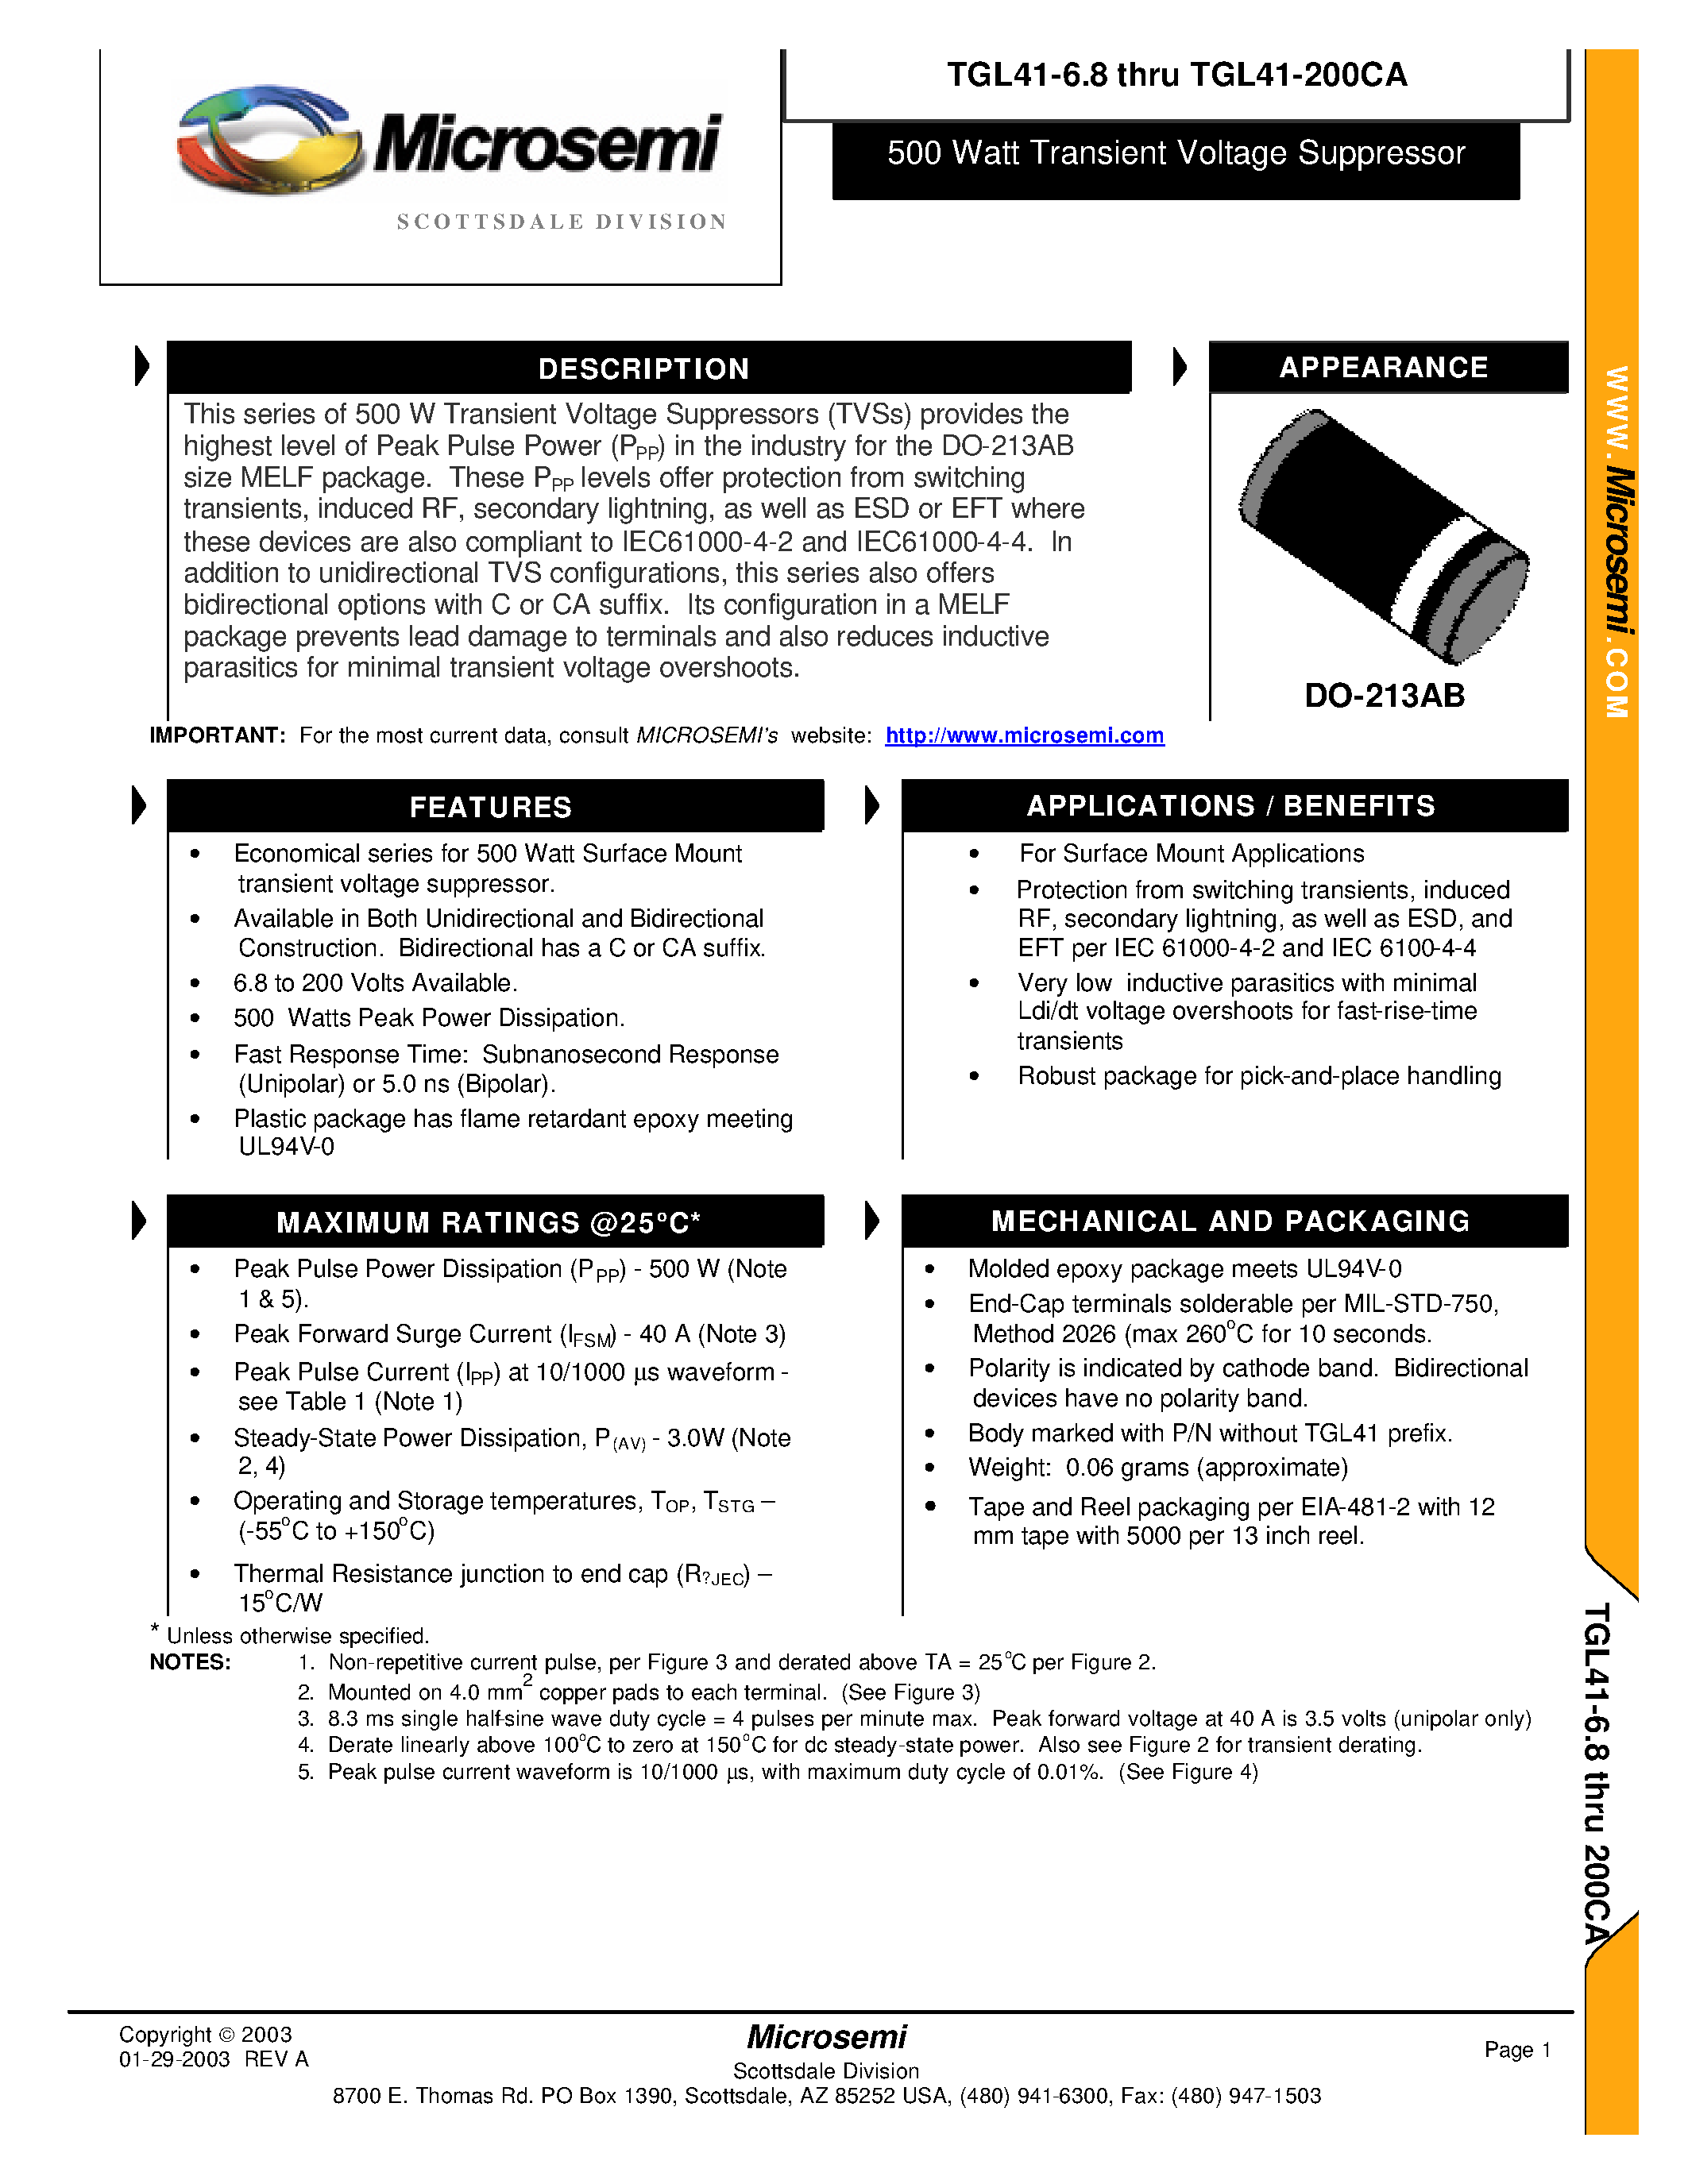 Datasheet TGL41-6.8A - 500 Watt Transient Voltage Suppressor page 1